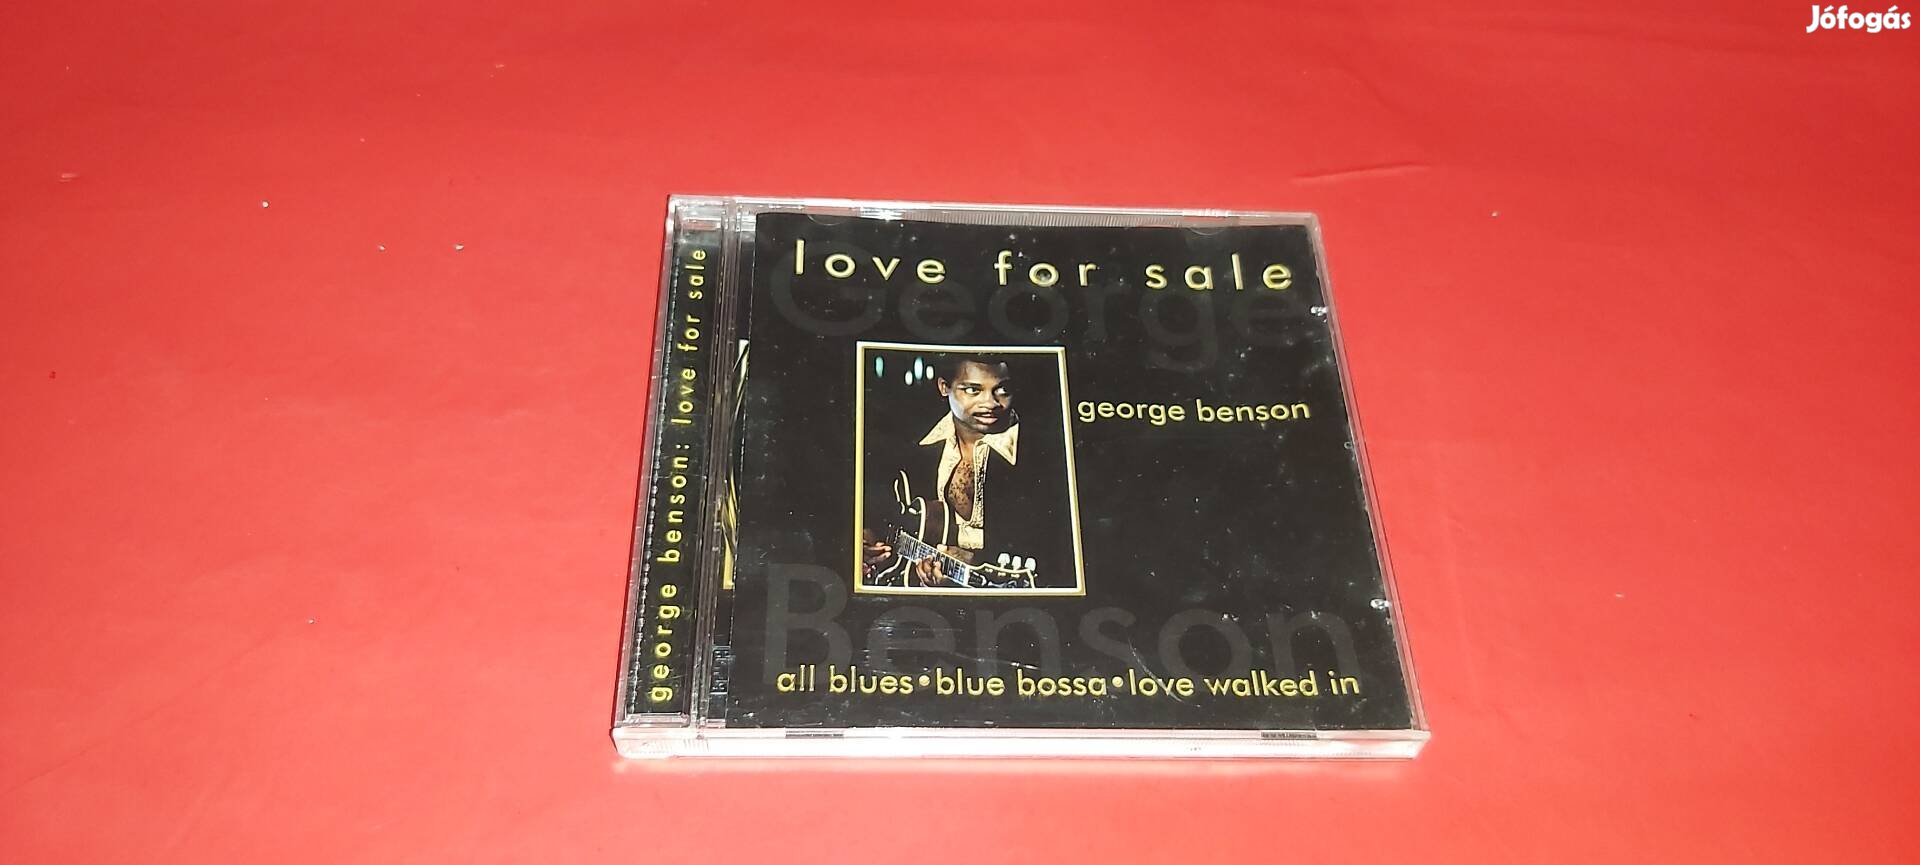 George Benson Love for sale Cd 